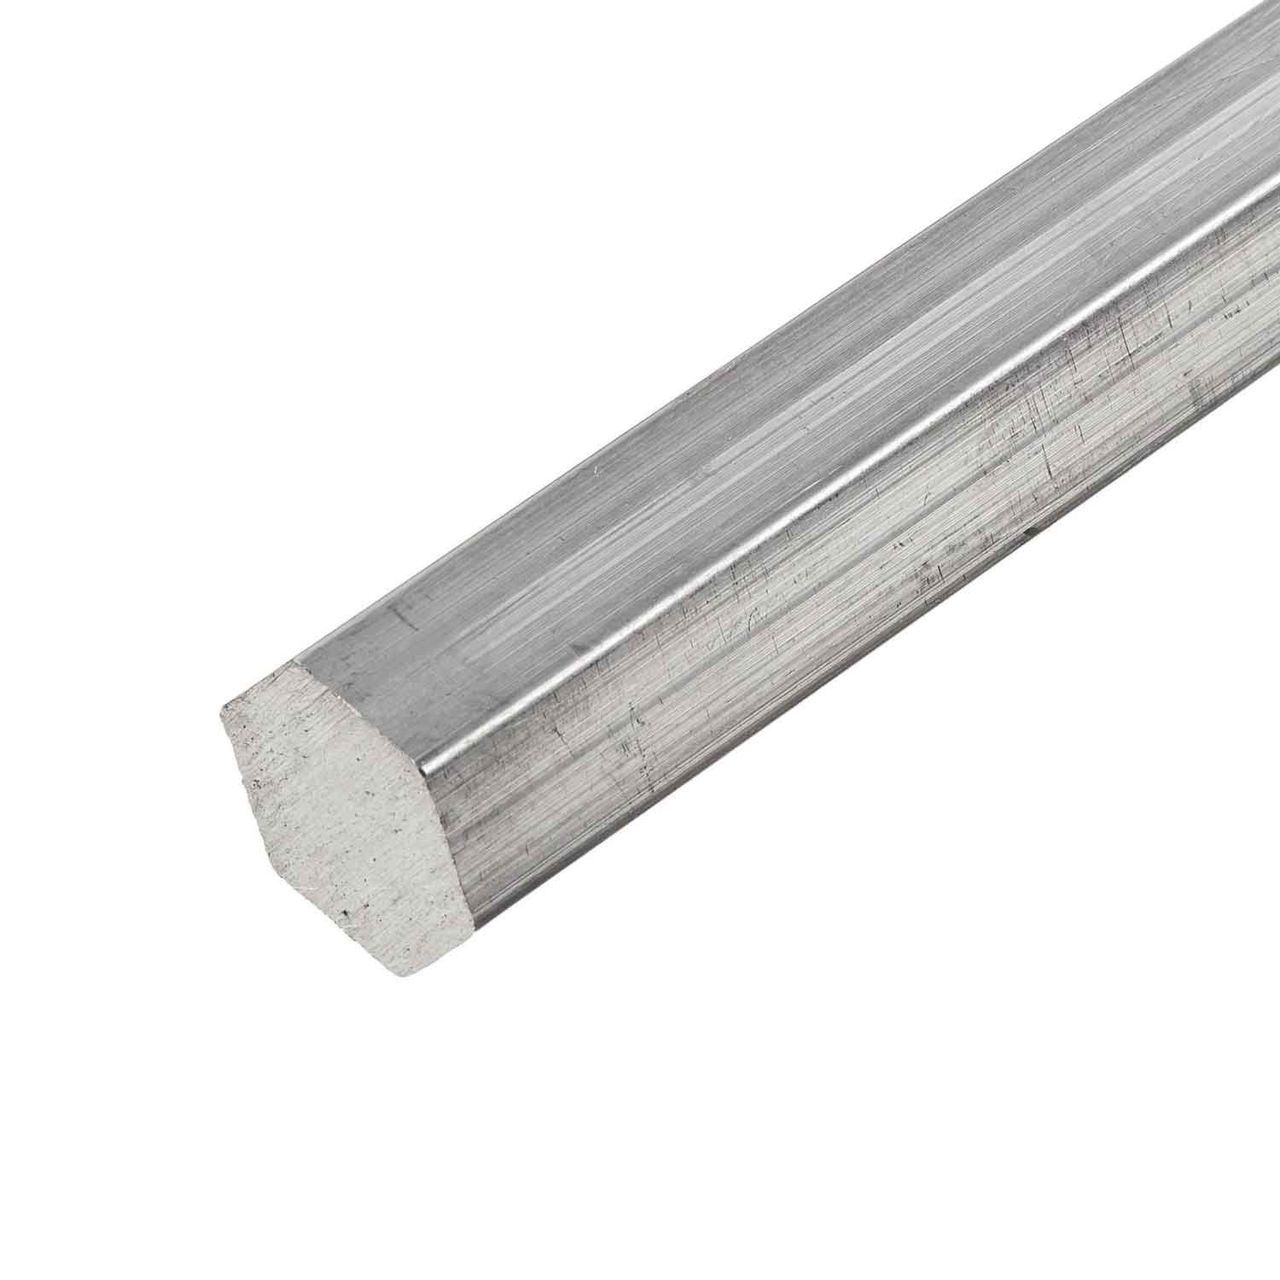 Across Flat 4mm Length 500mm 6061 Aluminum Solid Hex Rod Bar